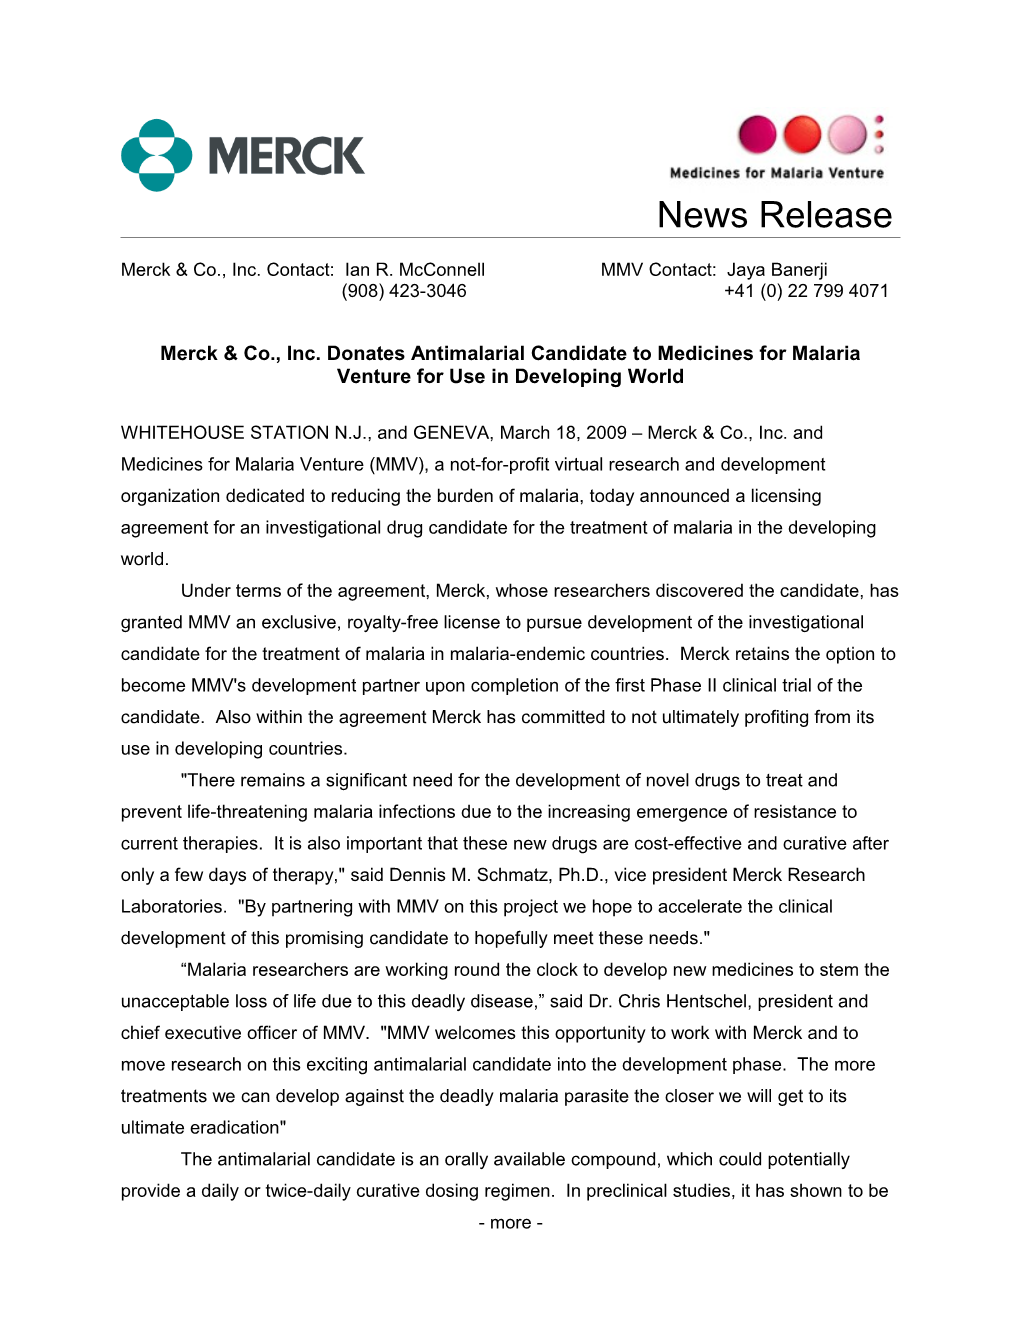 Merck & Co., Inc. Donates Antimalarial Candidate to Medicines for Malaria Venture For